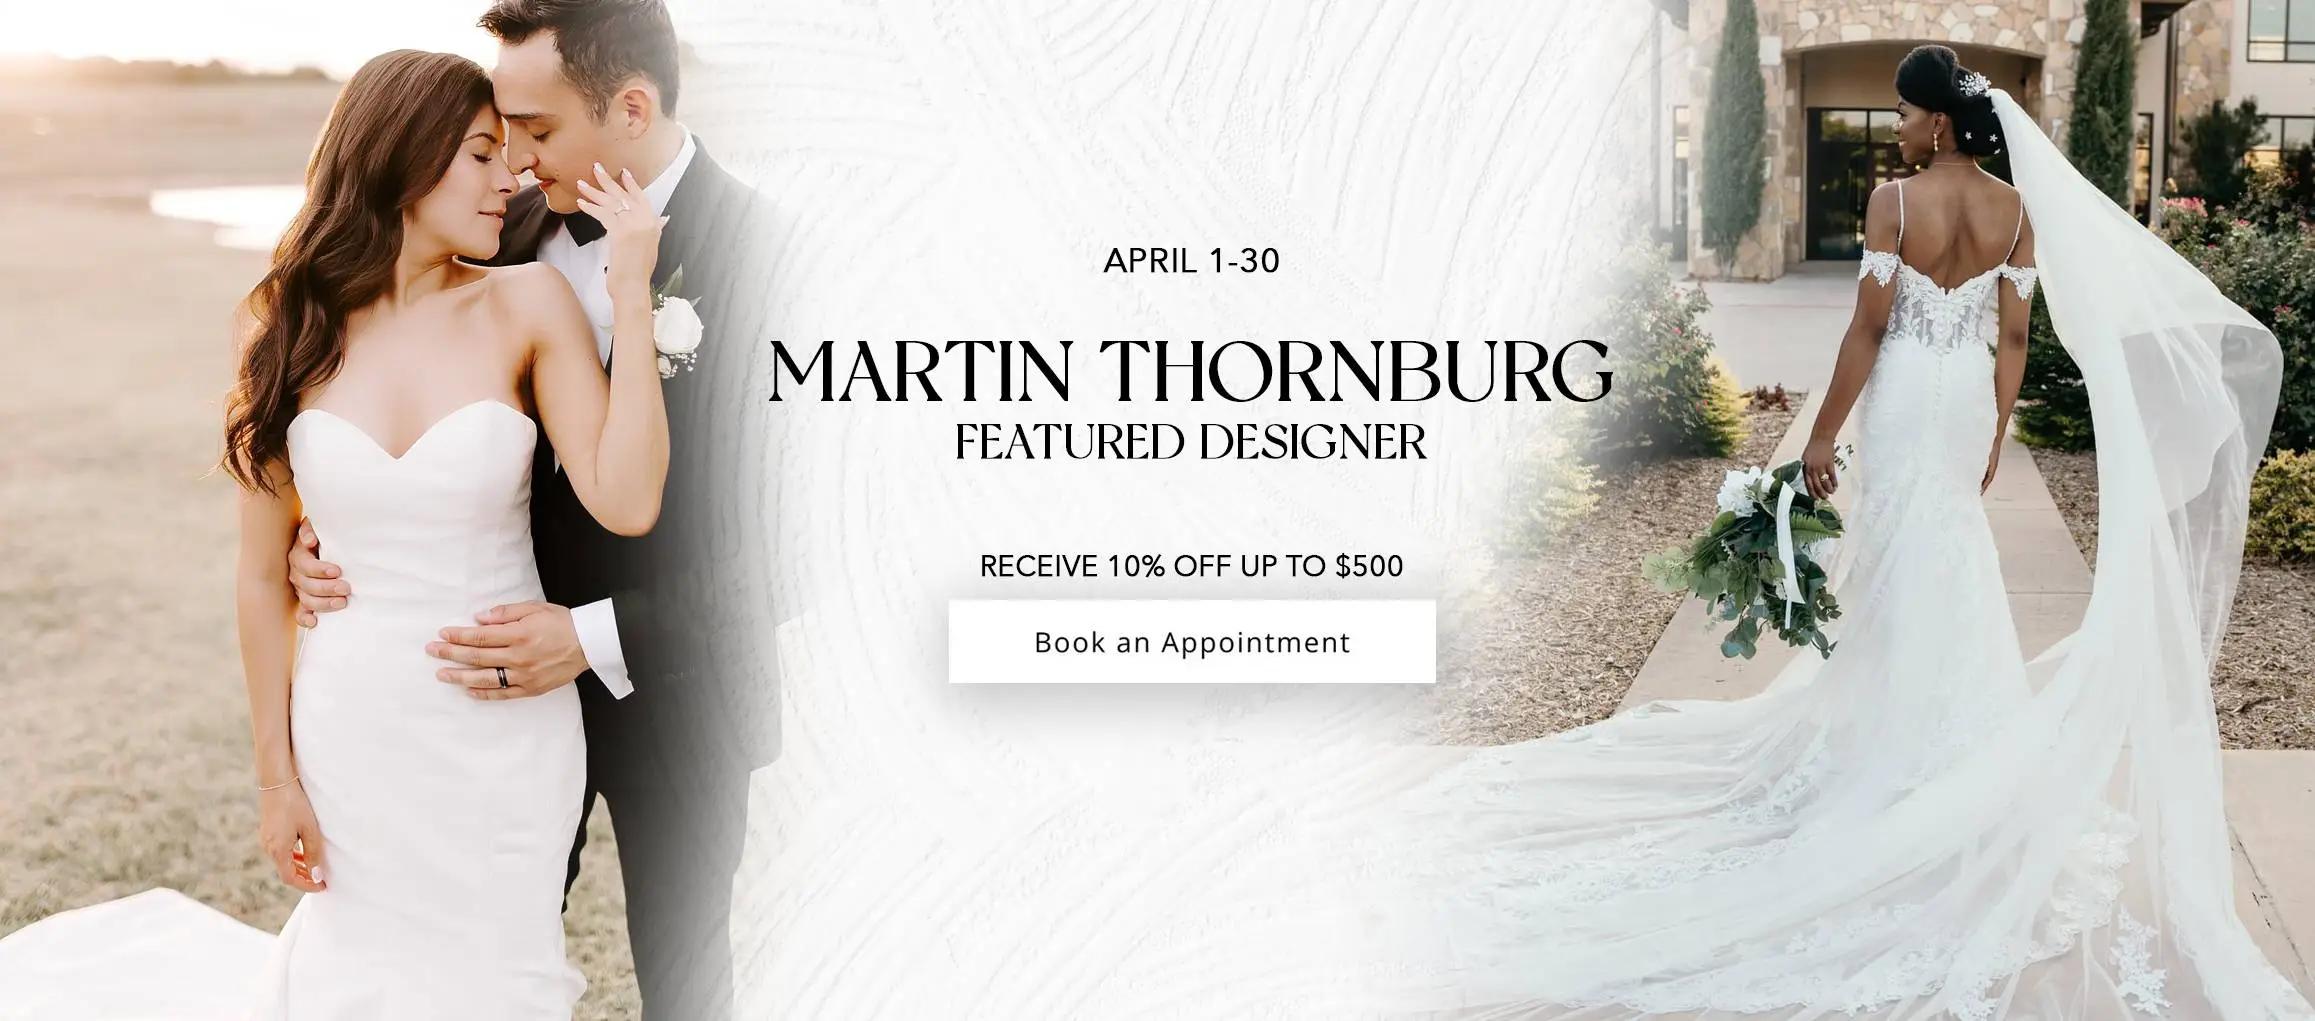 Martin Thornburg Featured Designer